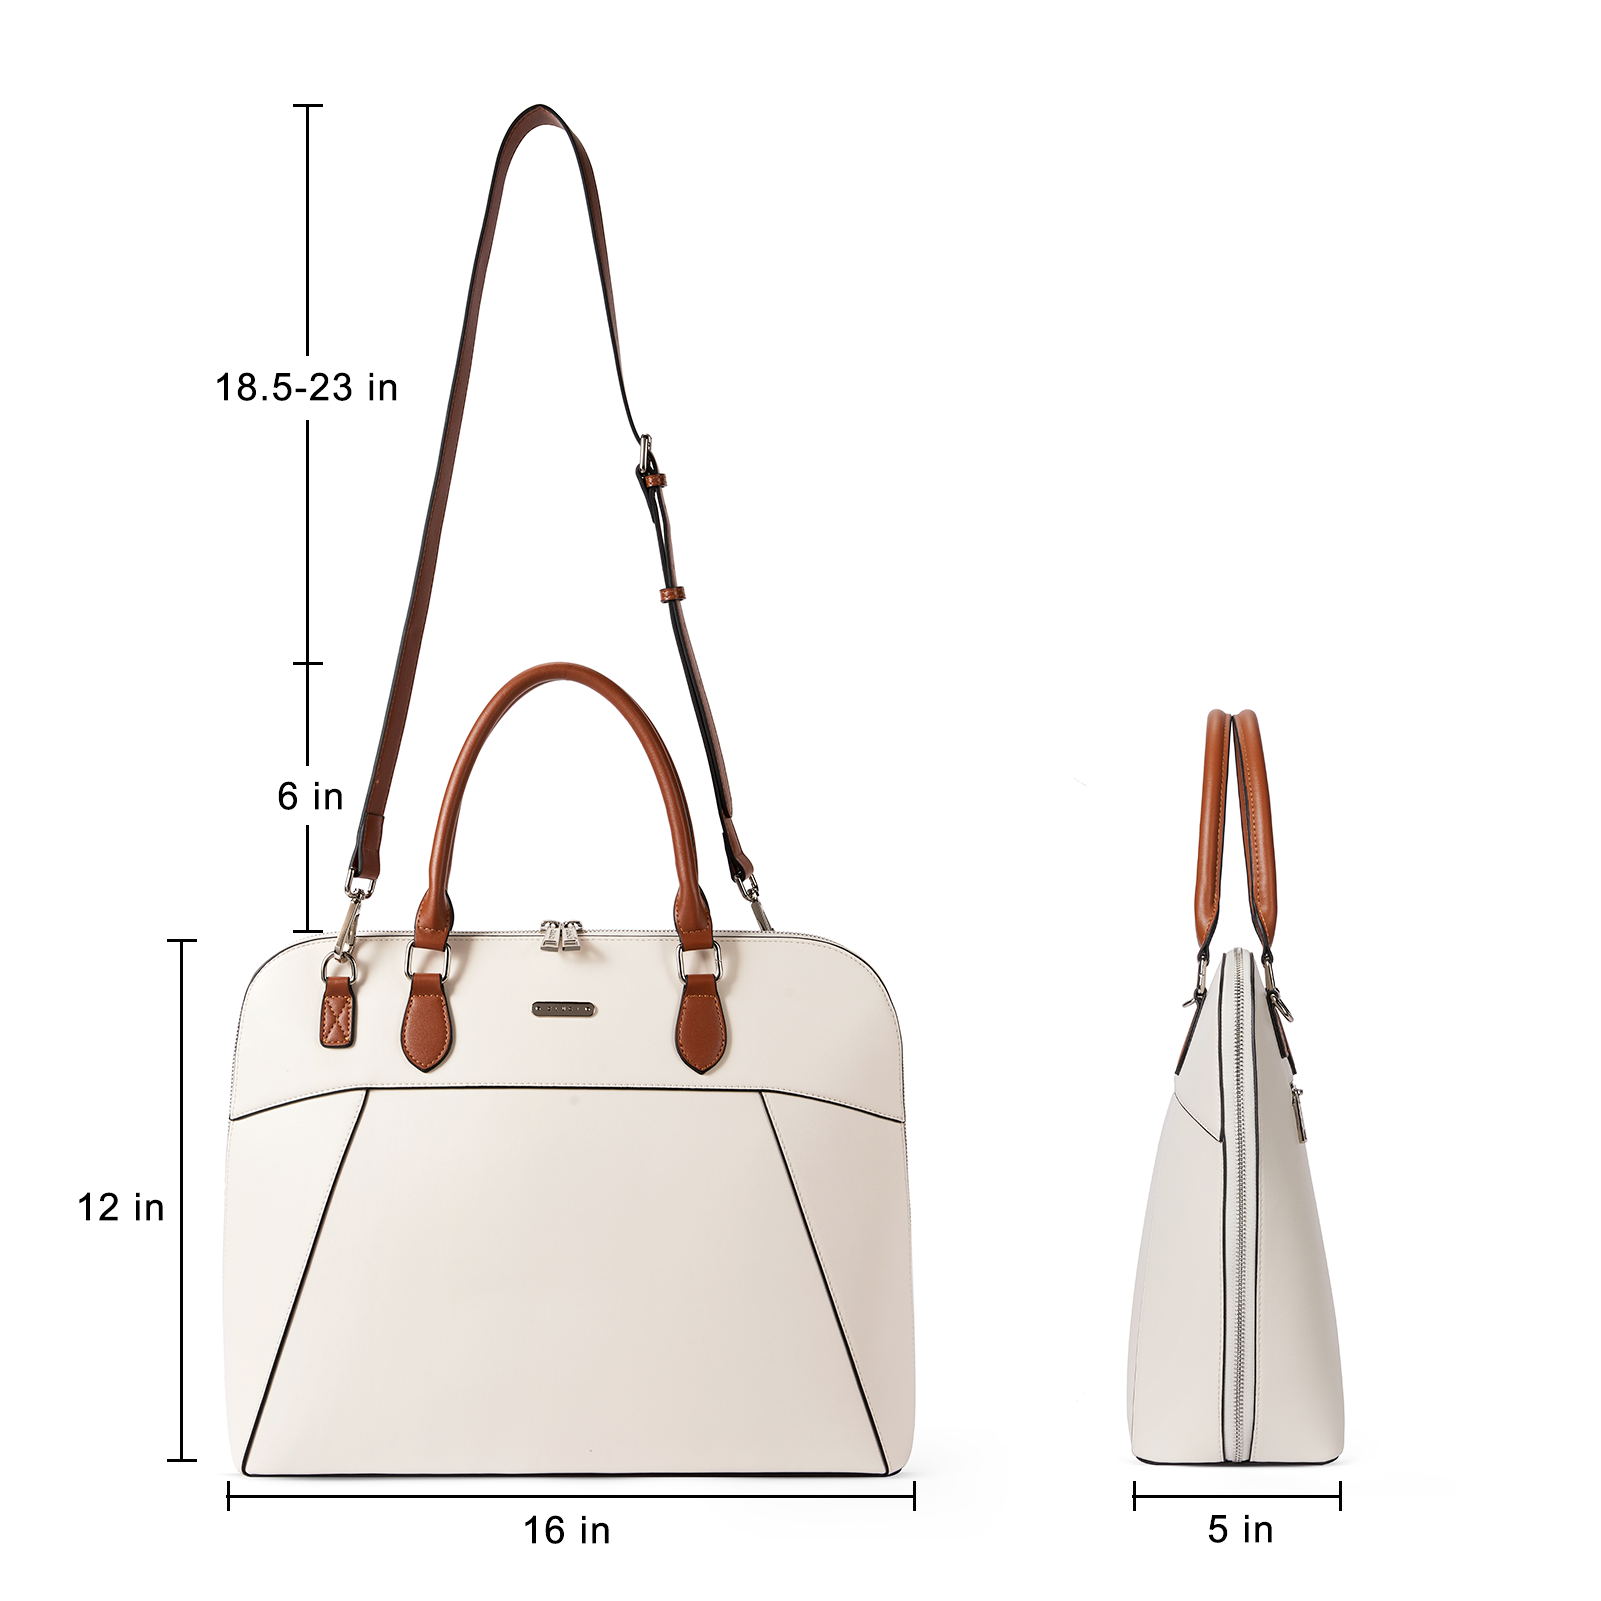 CLUCI Briefcase for Women Leather 15.6inch Laptop Copmputer Slim Handbags Shoulder Bag Beige